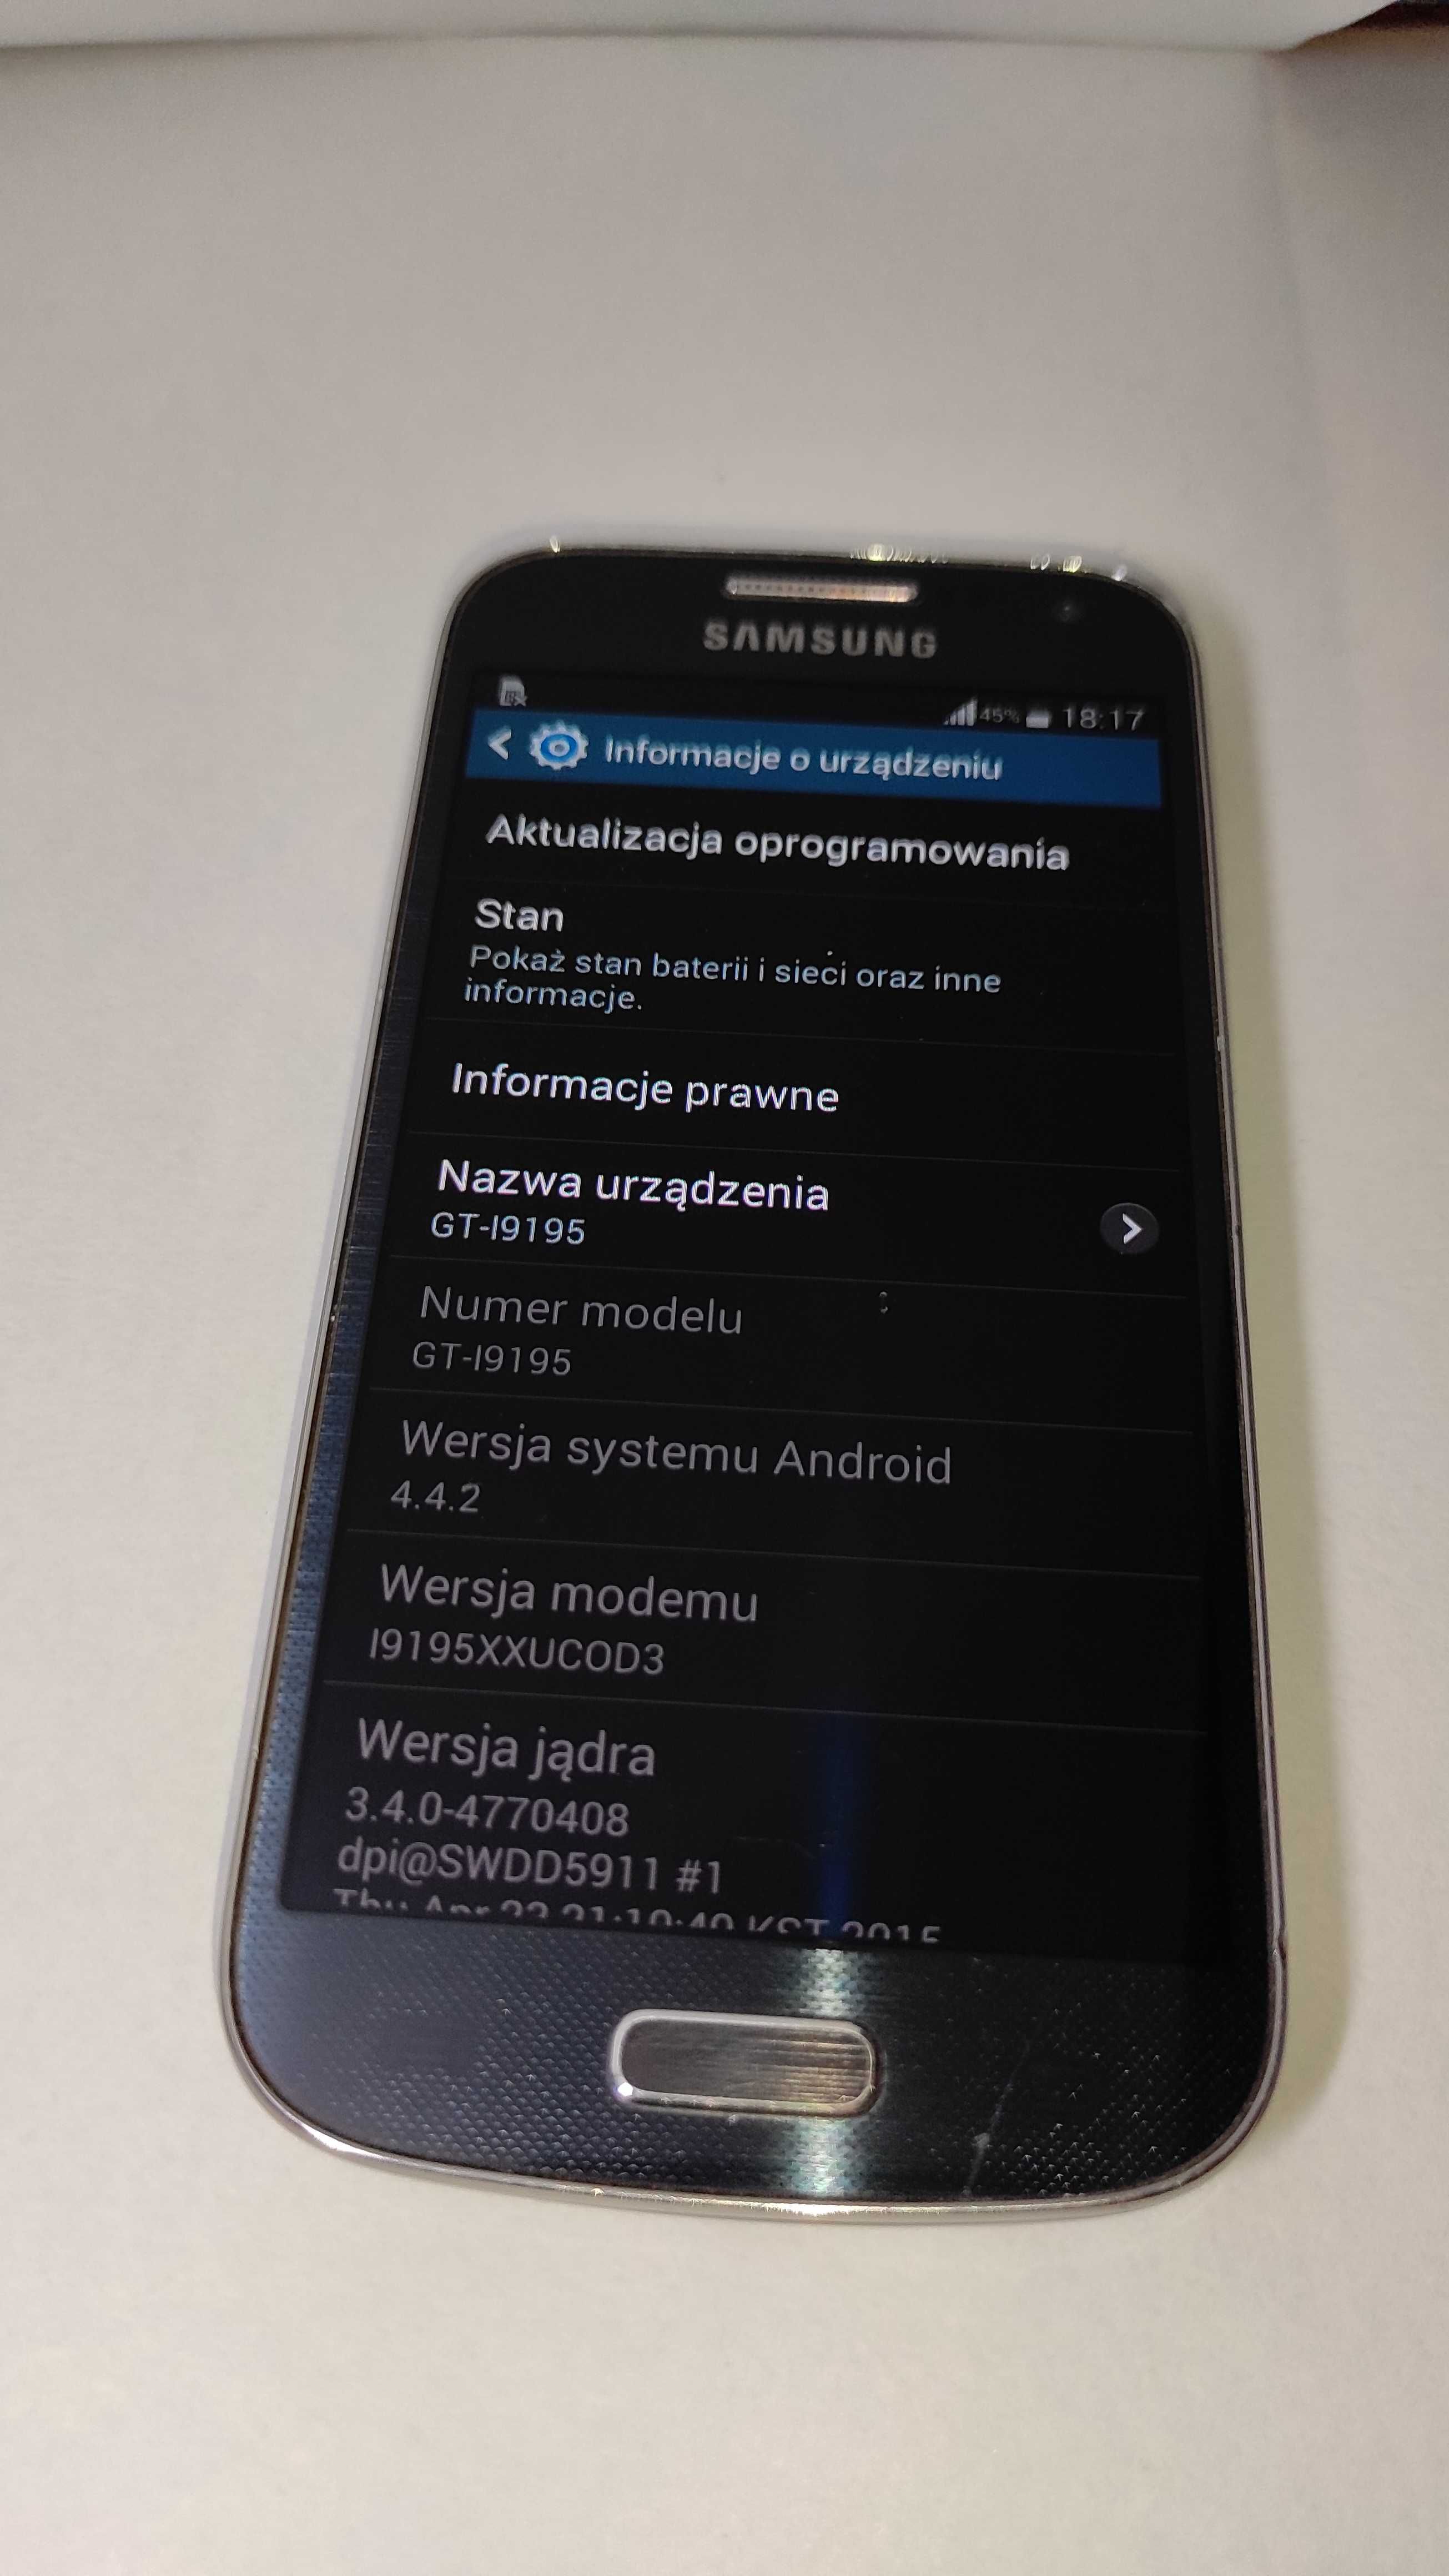 Samsung Galaxy S4 Mini 1,5 GB / 8 GB 733